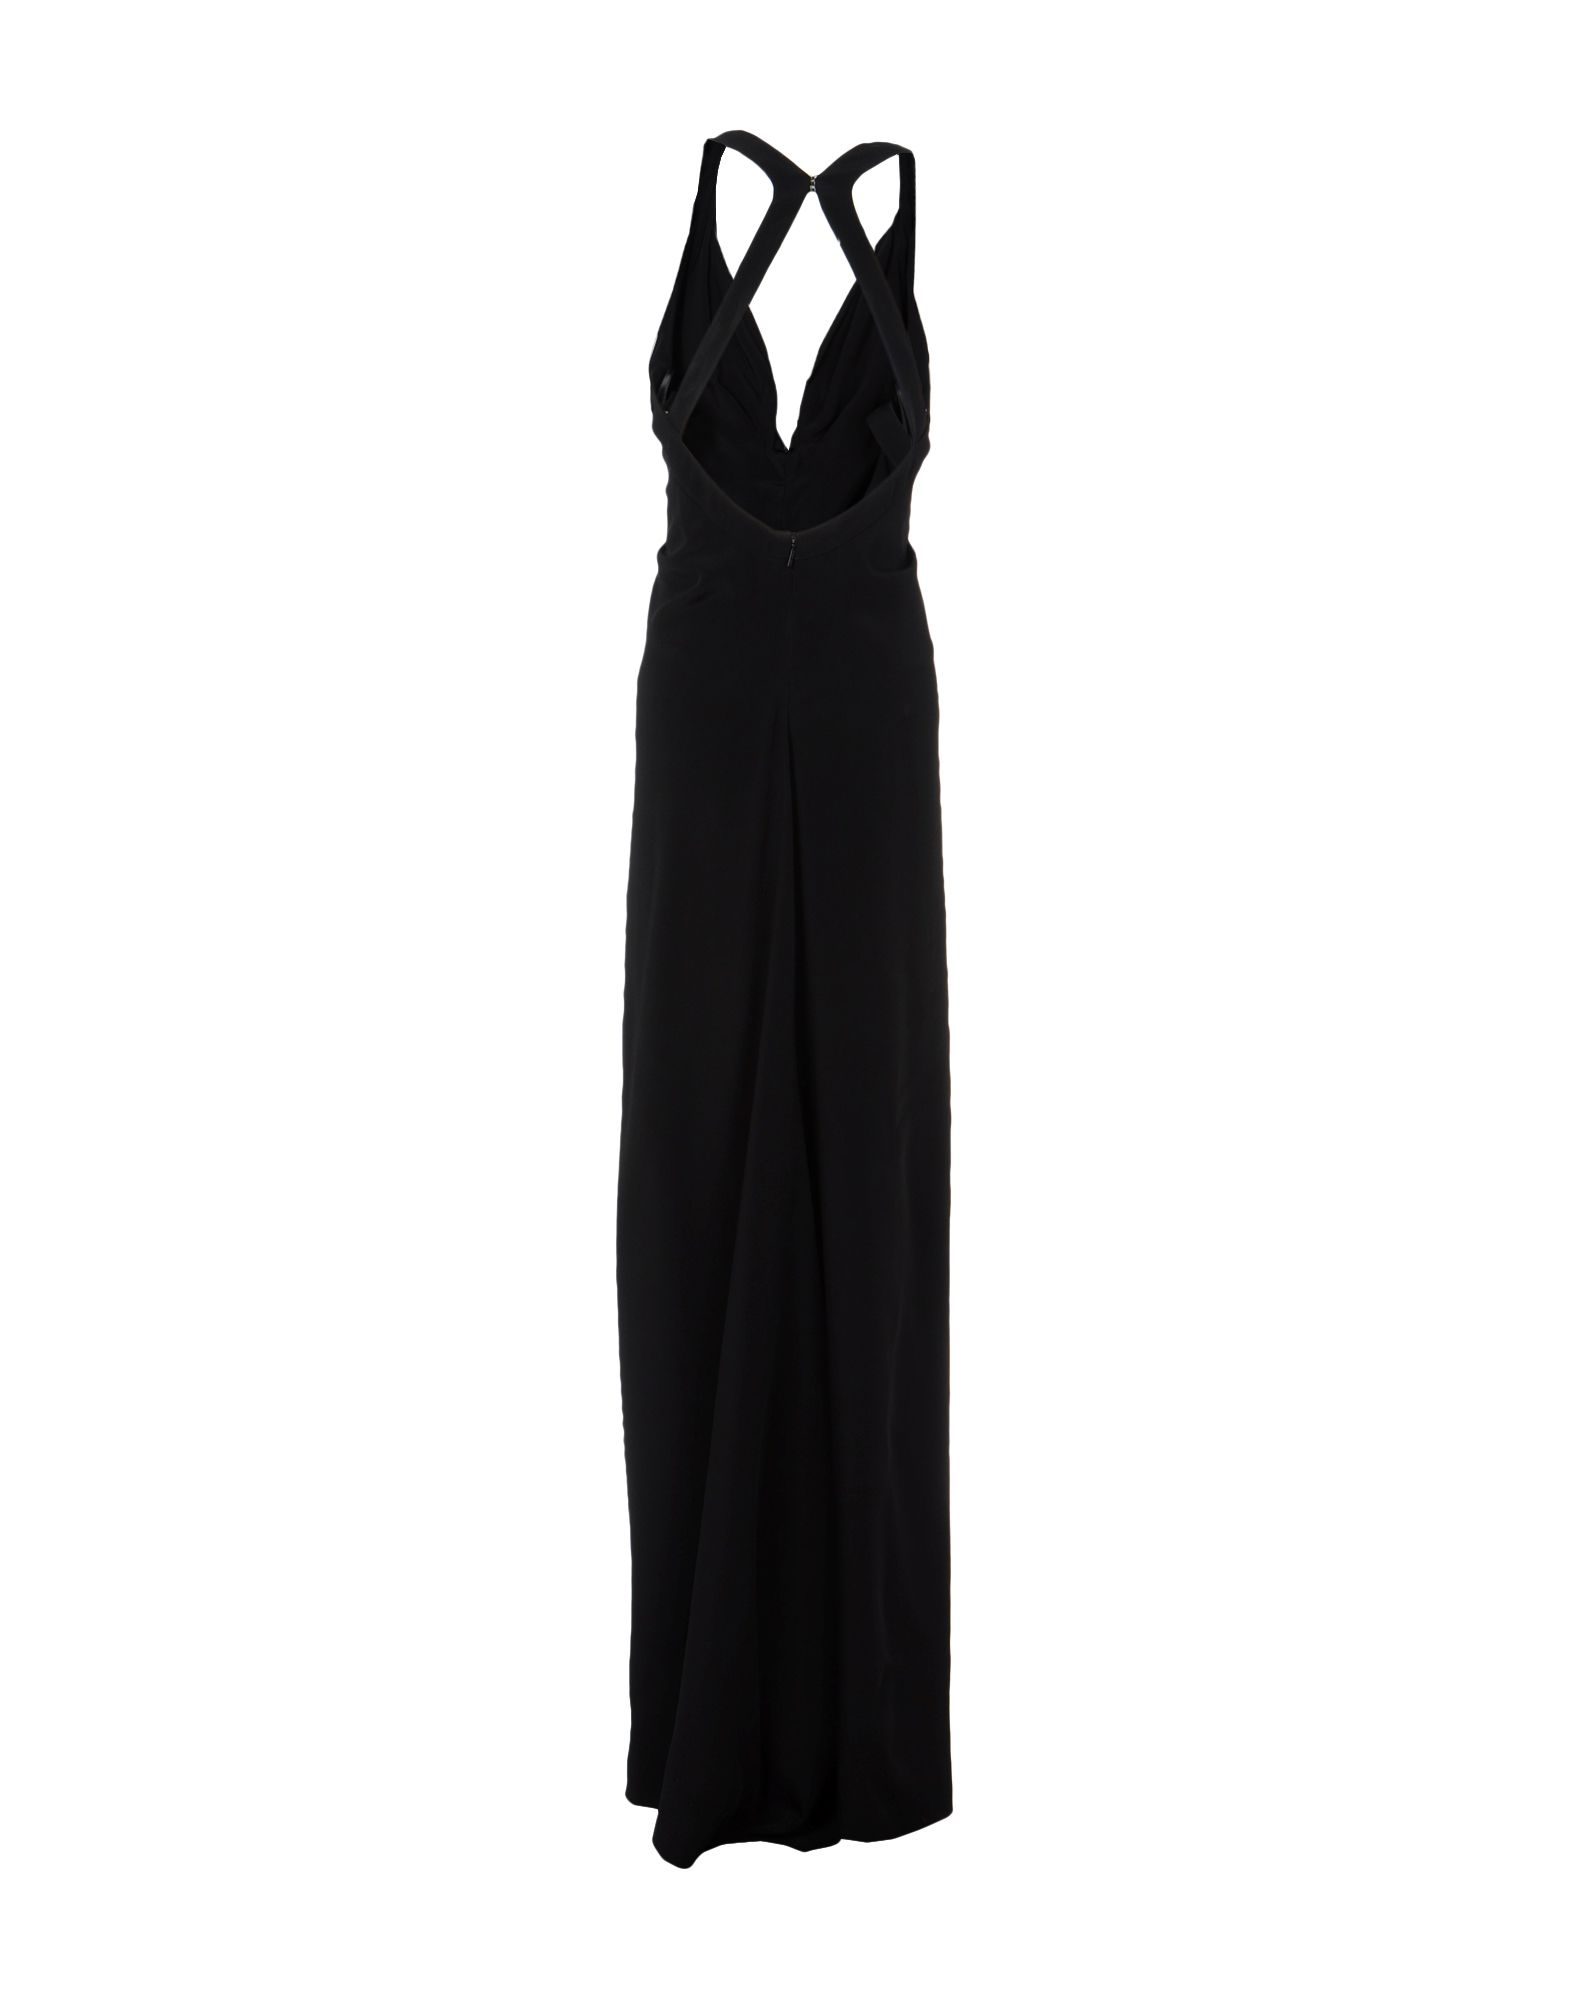 Roberto Cavalli Sleeveless Deep-Neck Dress in Black | Lyst